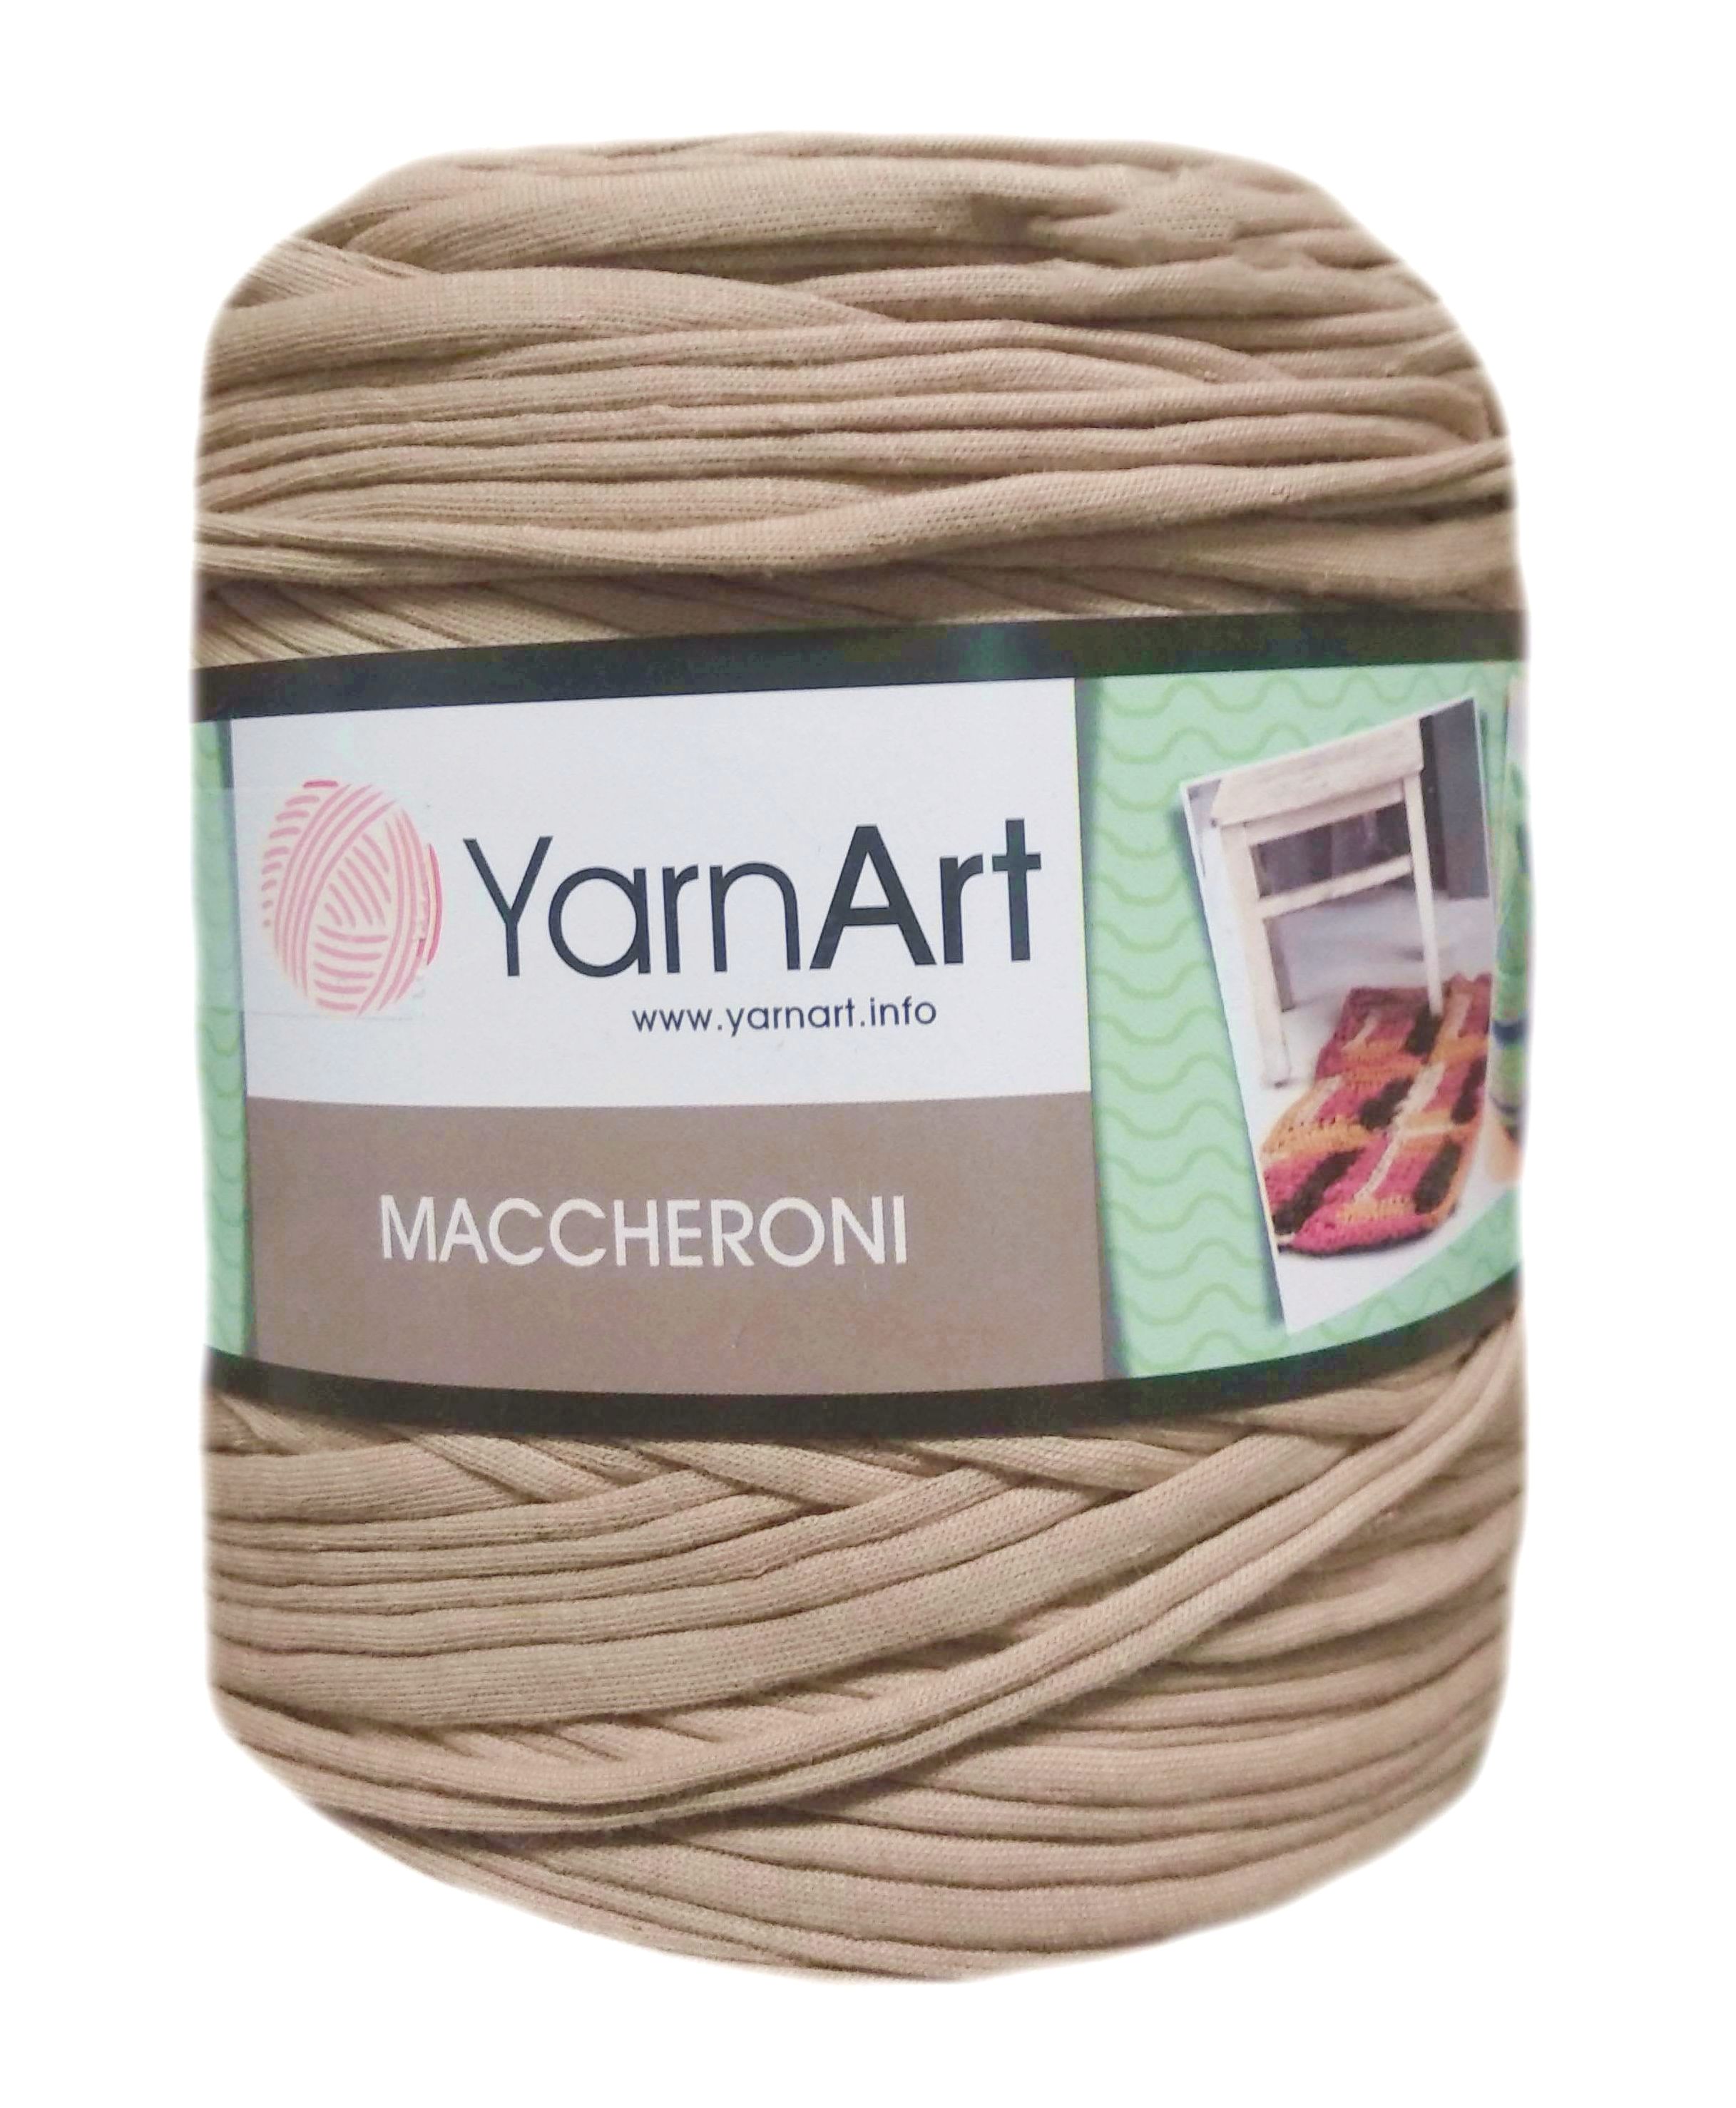 YarnArt MACCHERONI, drapp póló fonal.Tű 12-15 mm.